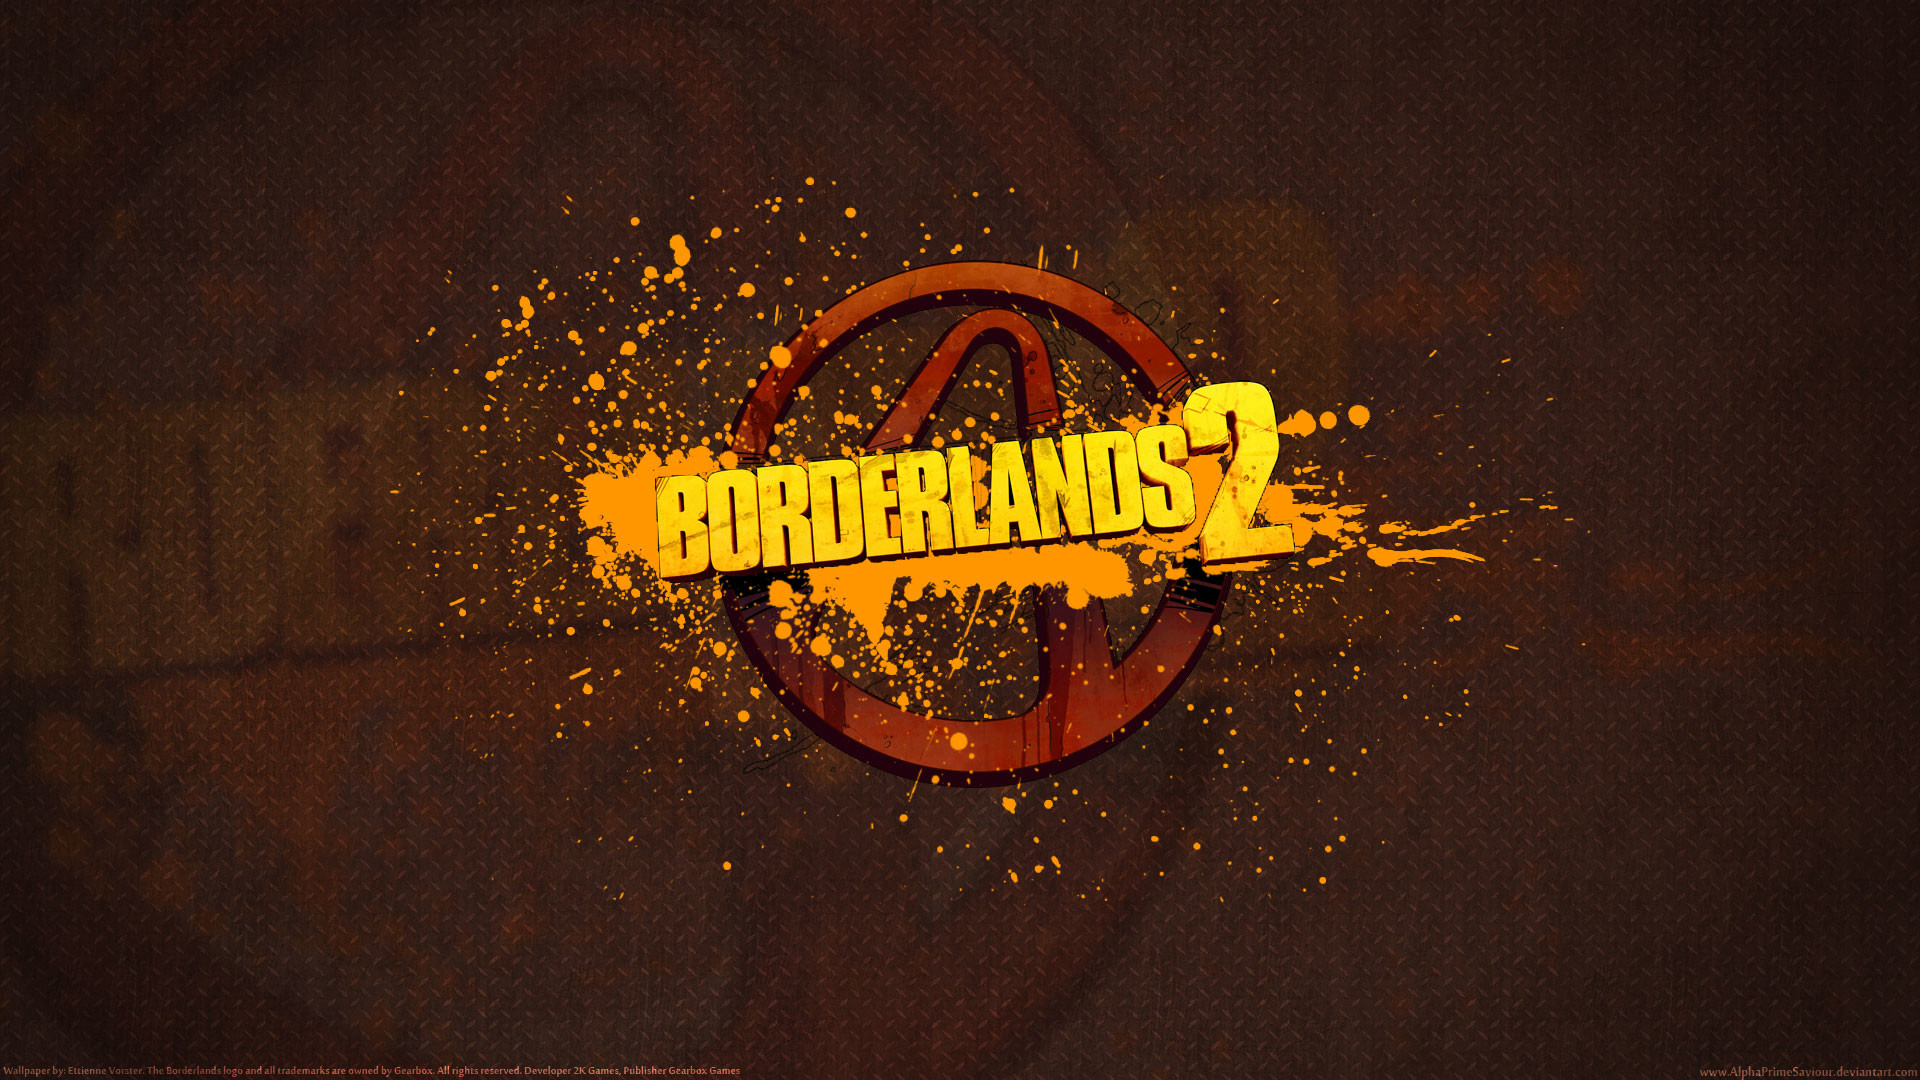 1920x1080 Borderlands 2 Logo. Free Max Payne 3 Wallpaper in 